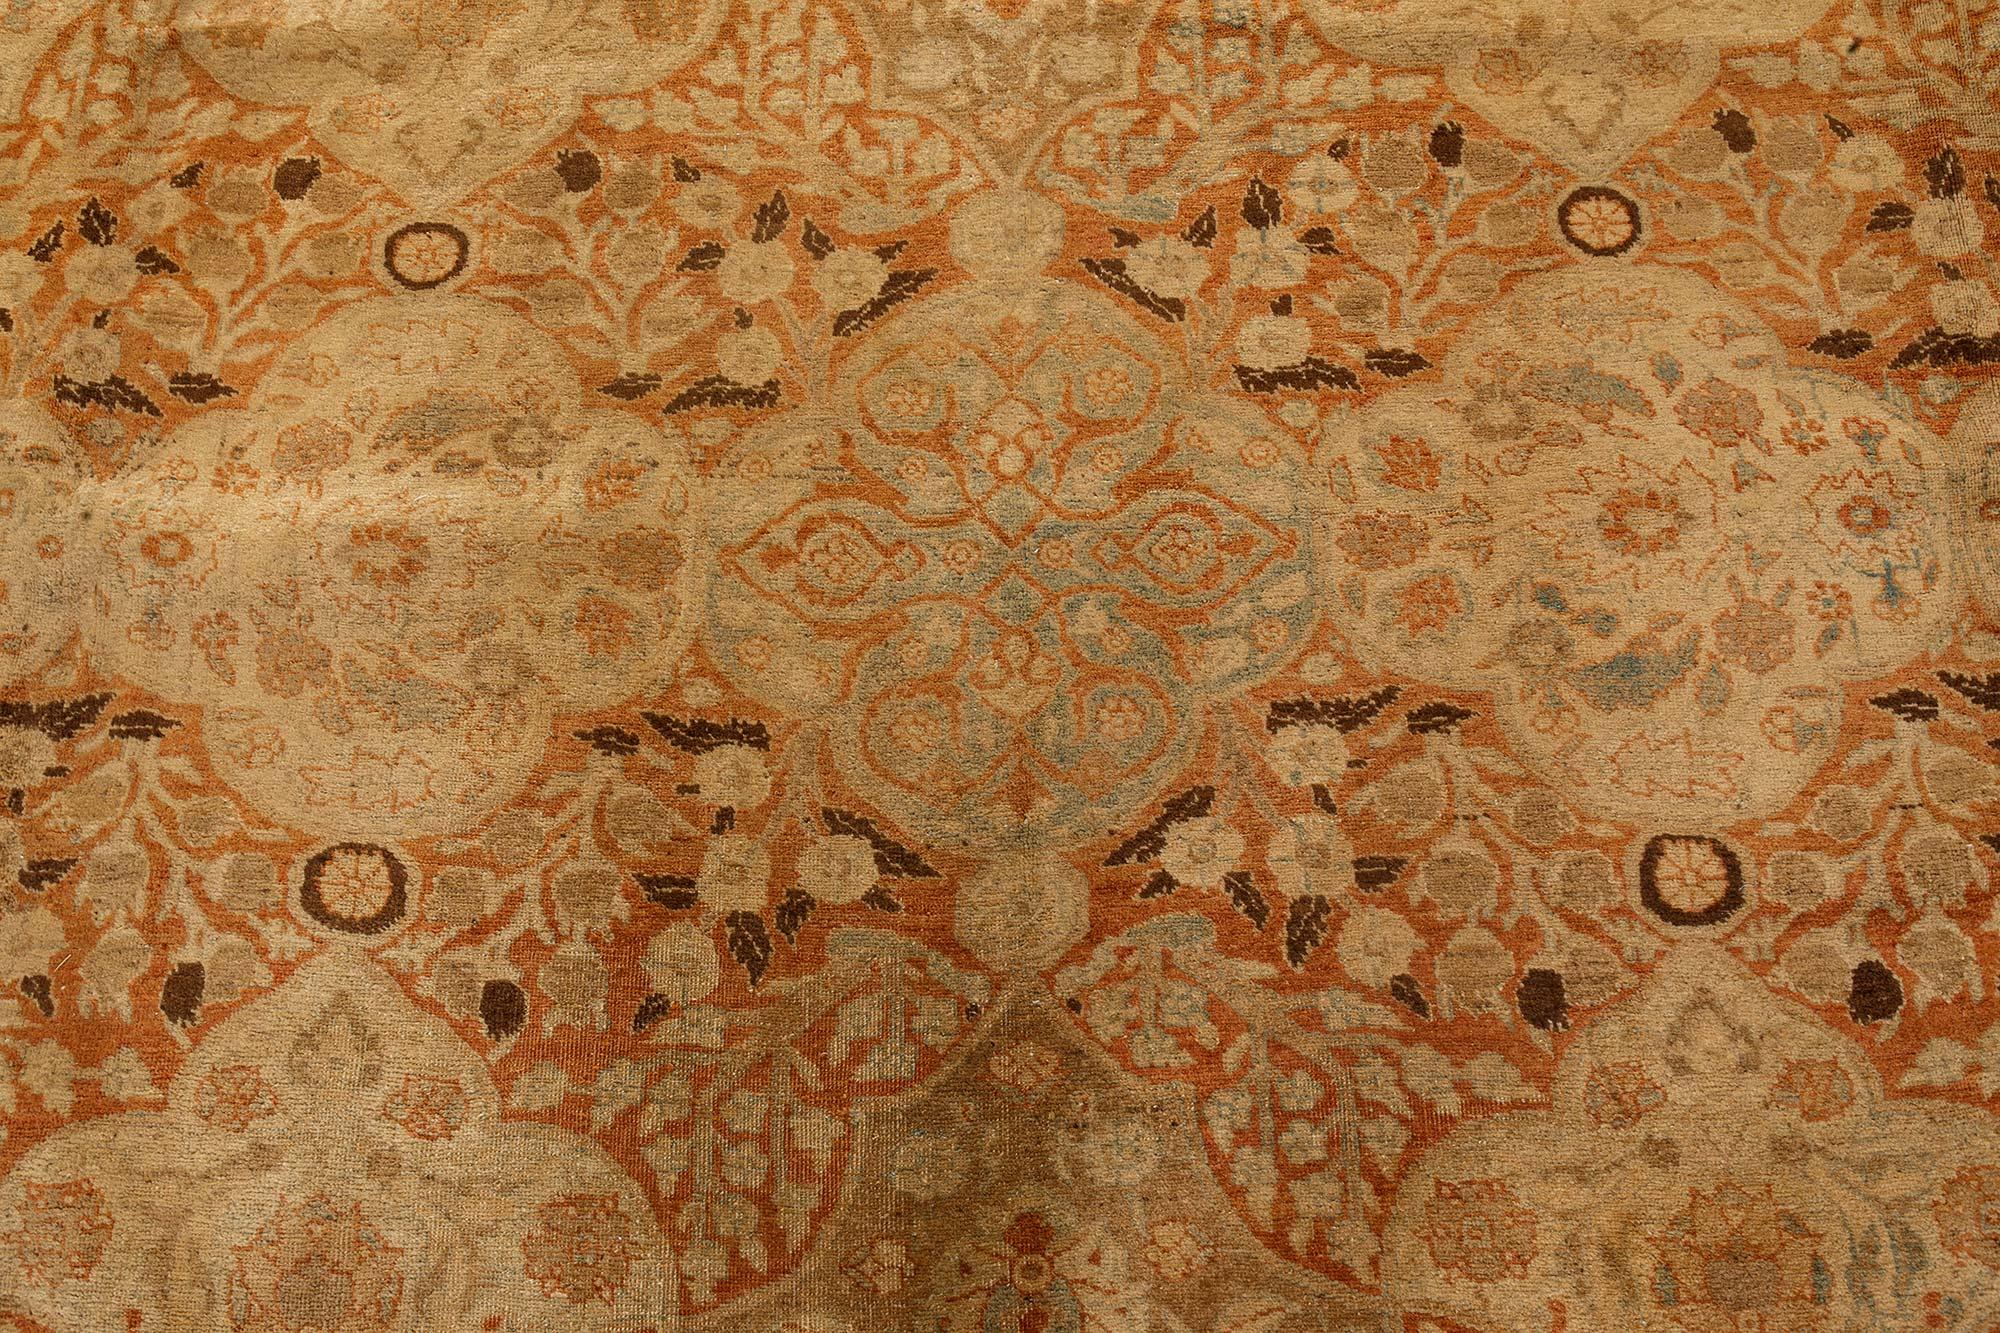 Authentic 19th century Persian Tabriz carpet
Size: 14'1